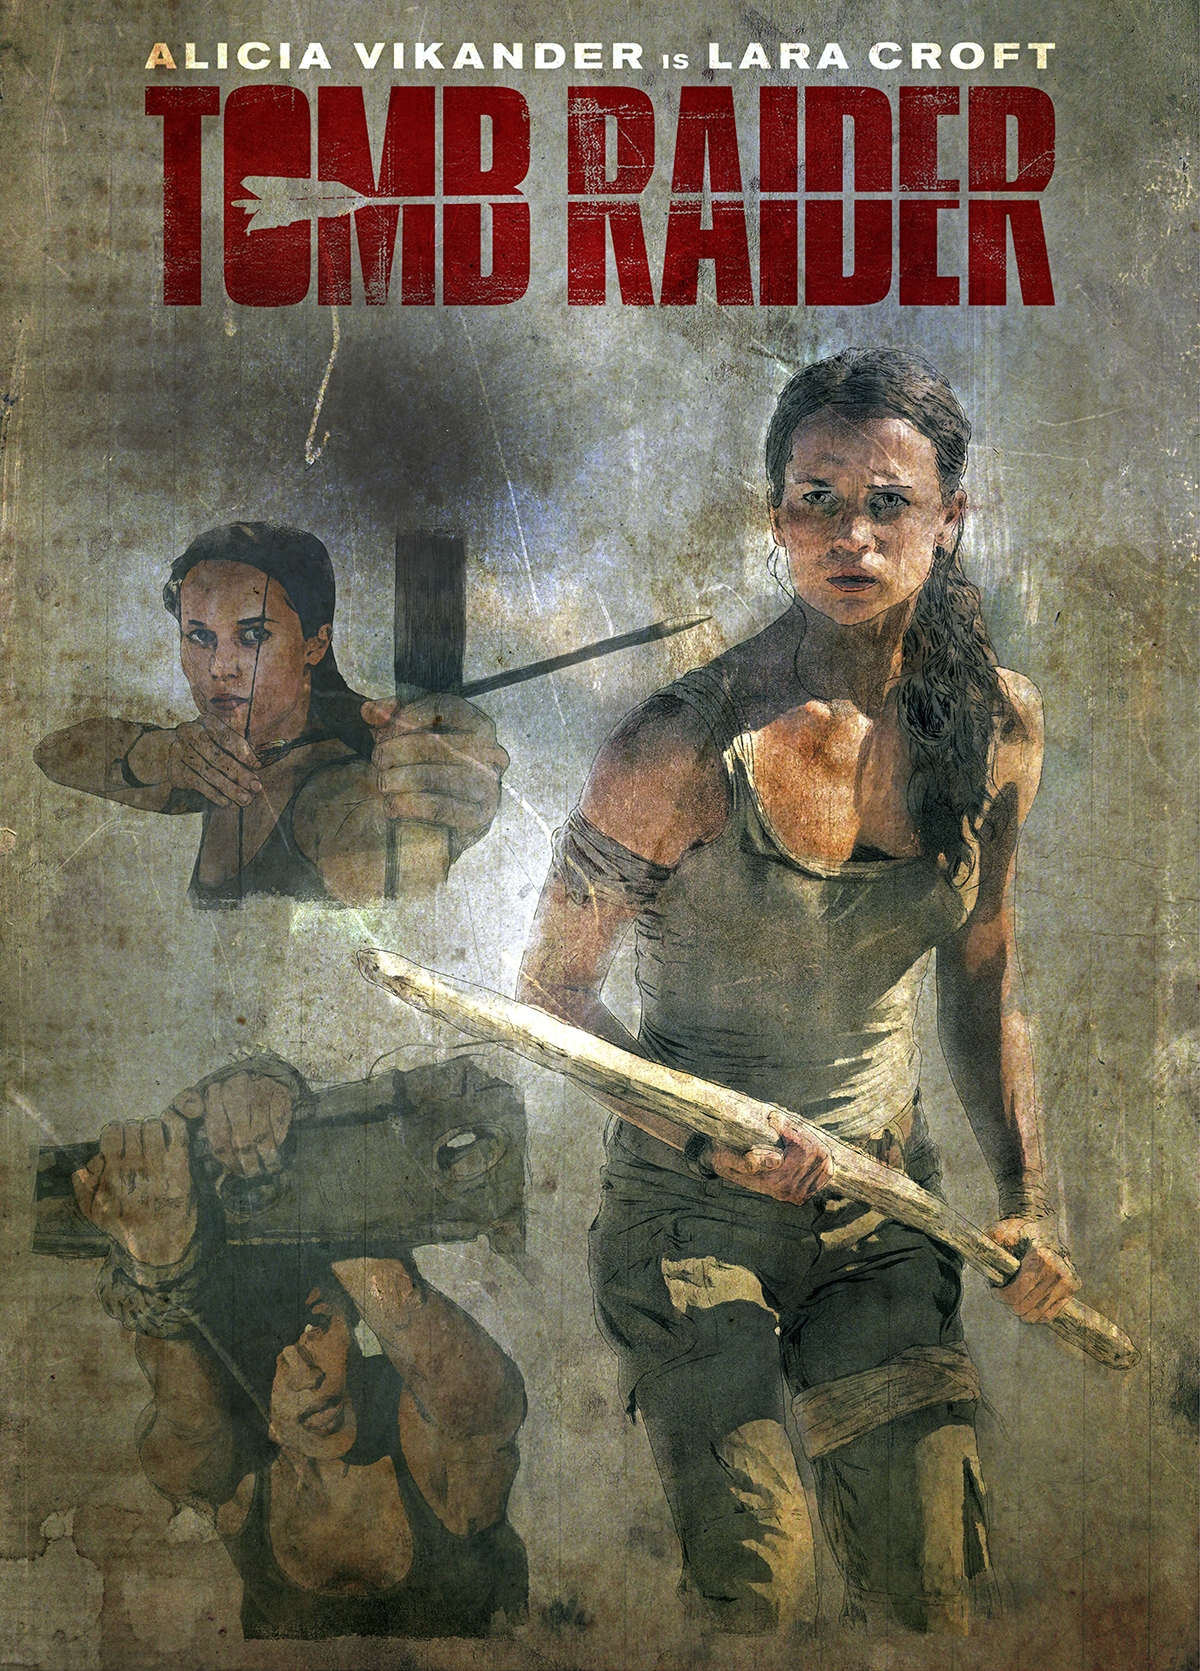 tomb raider 2 movie poster